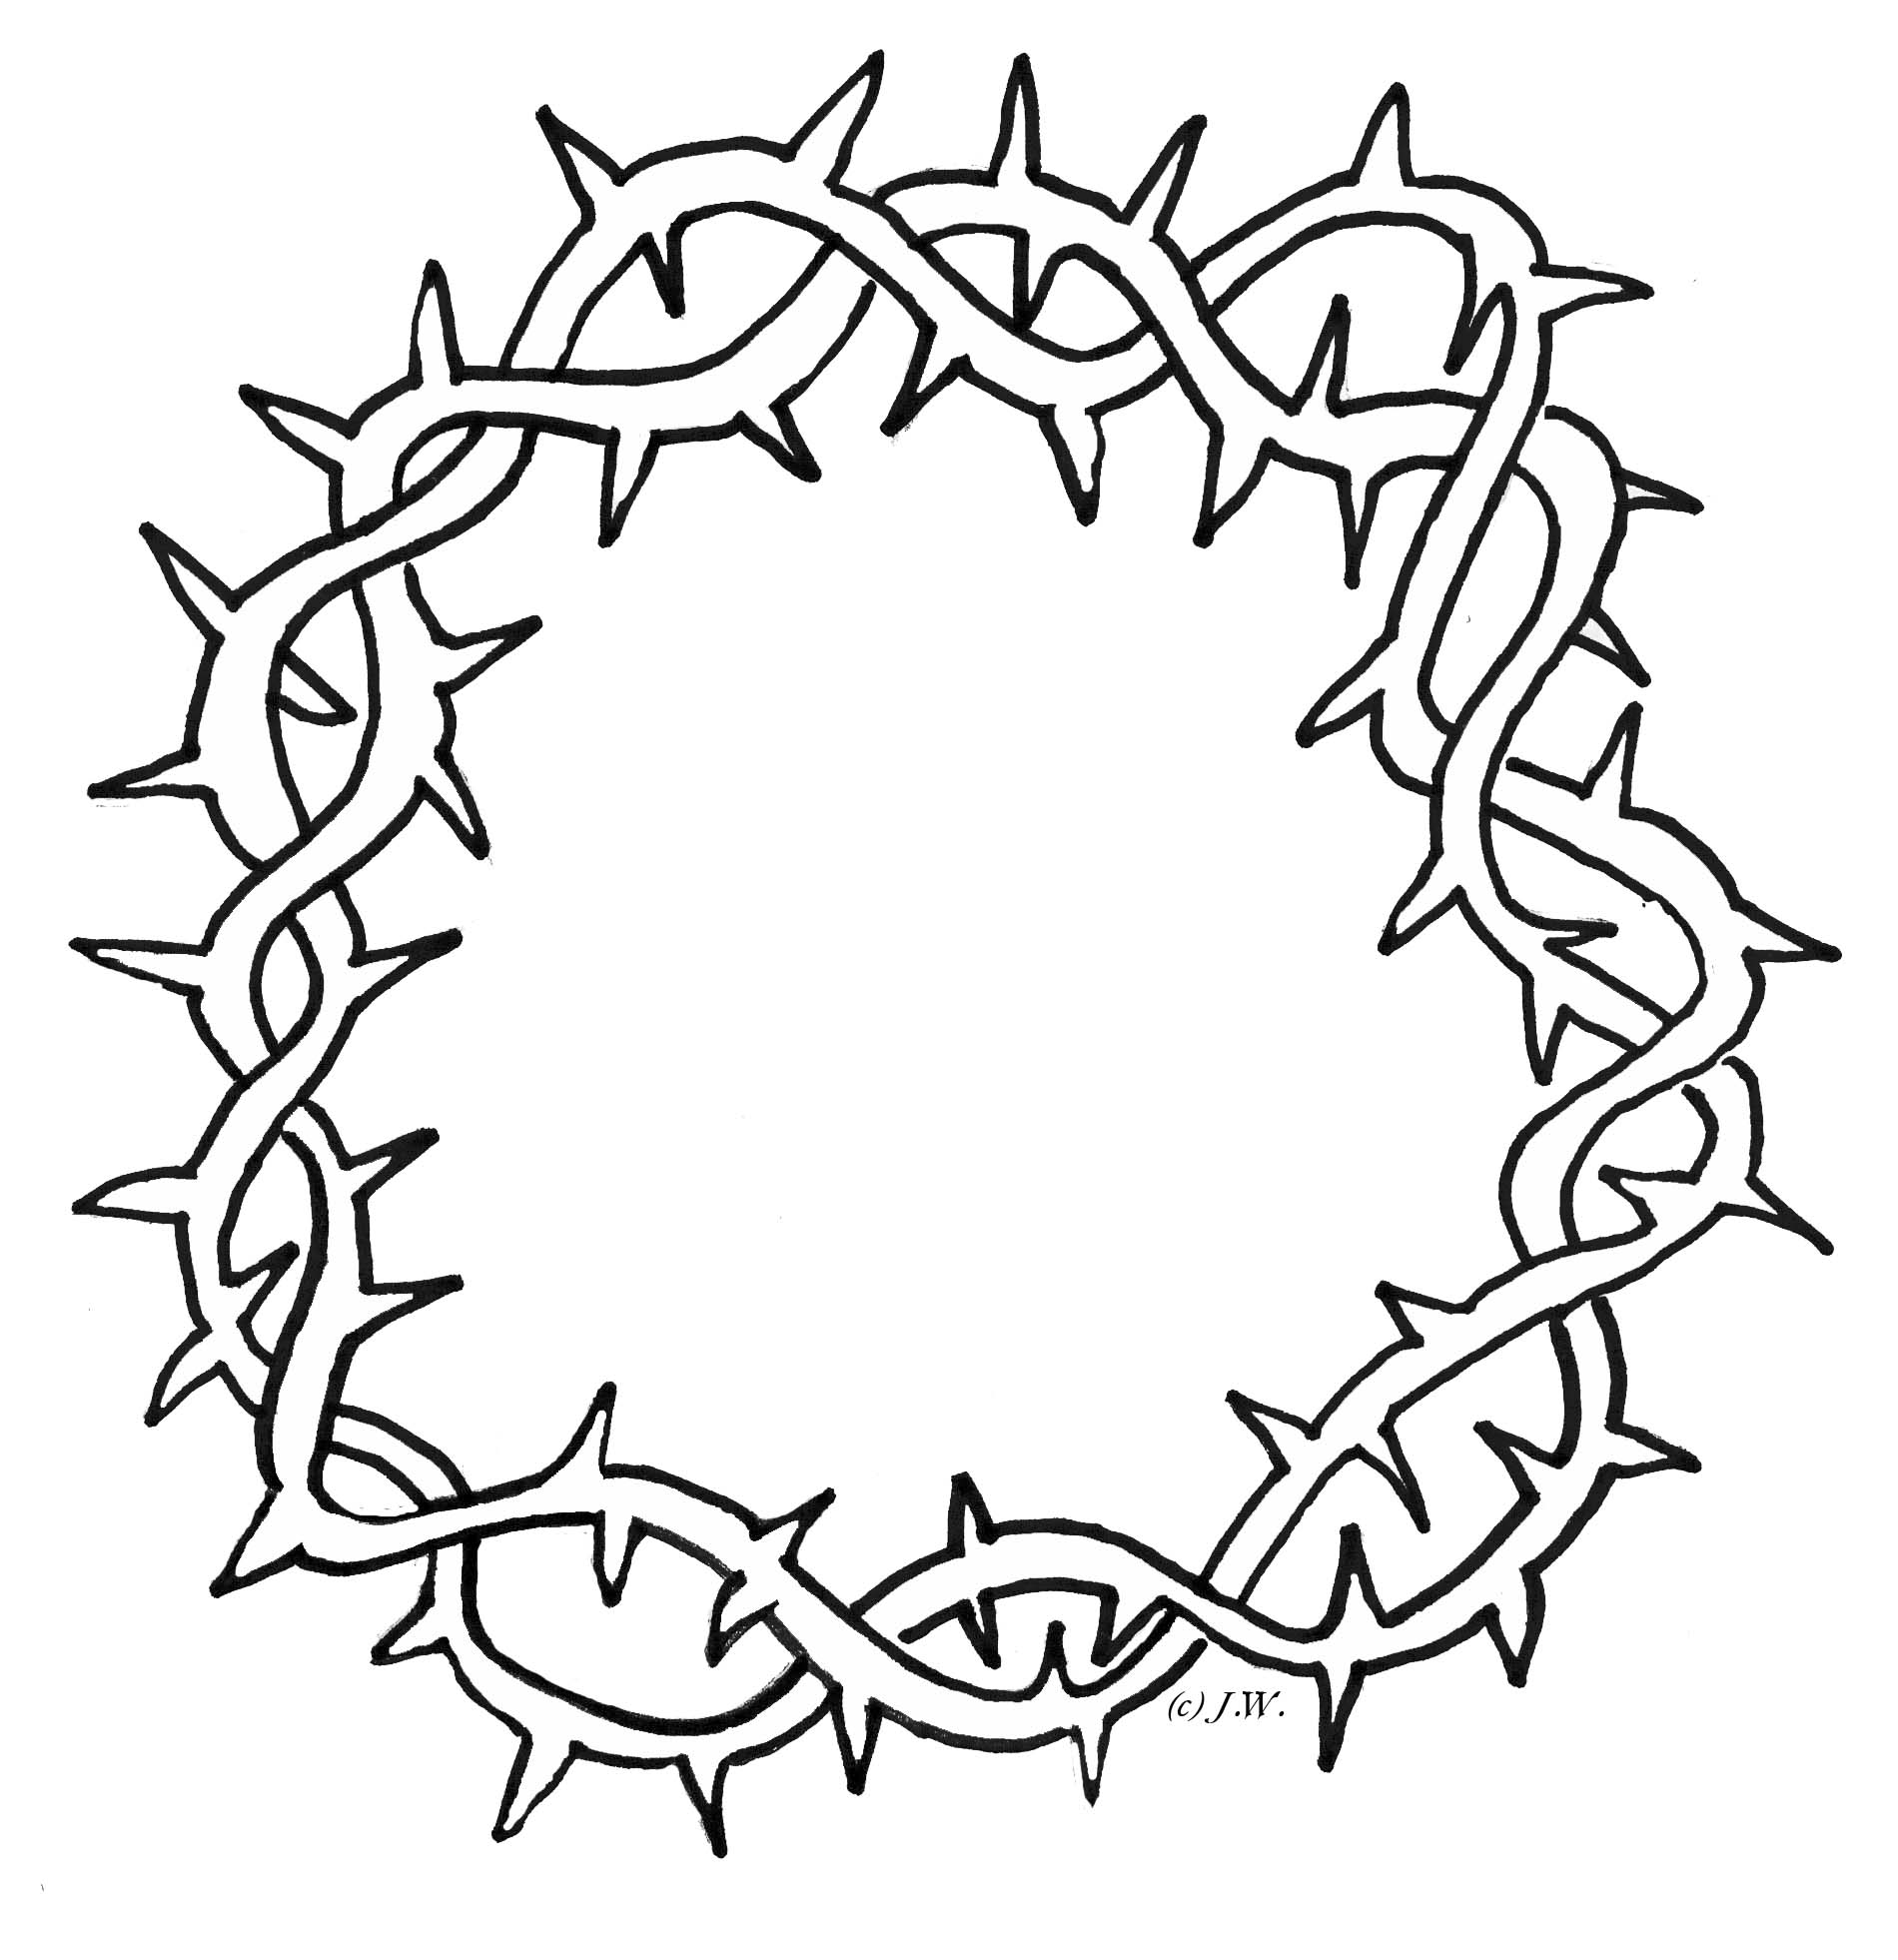 christian clip art crown of thorns - photo #41